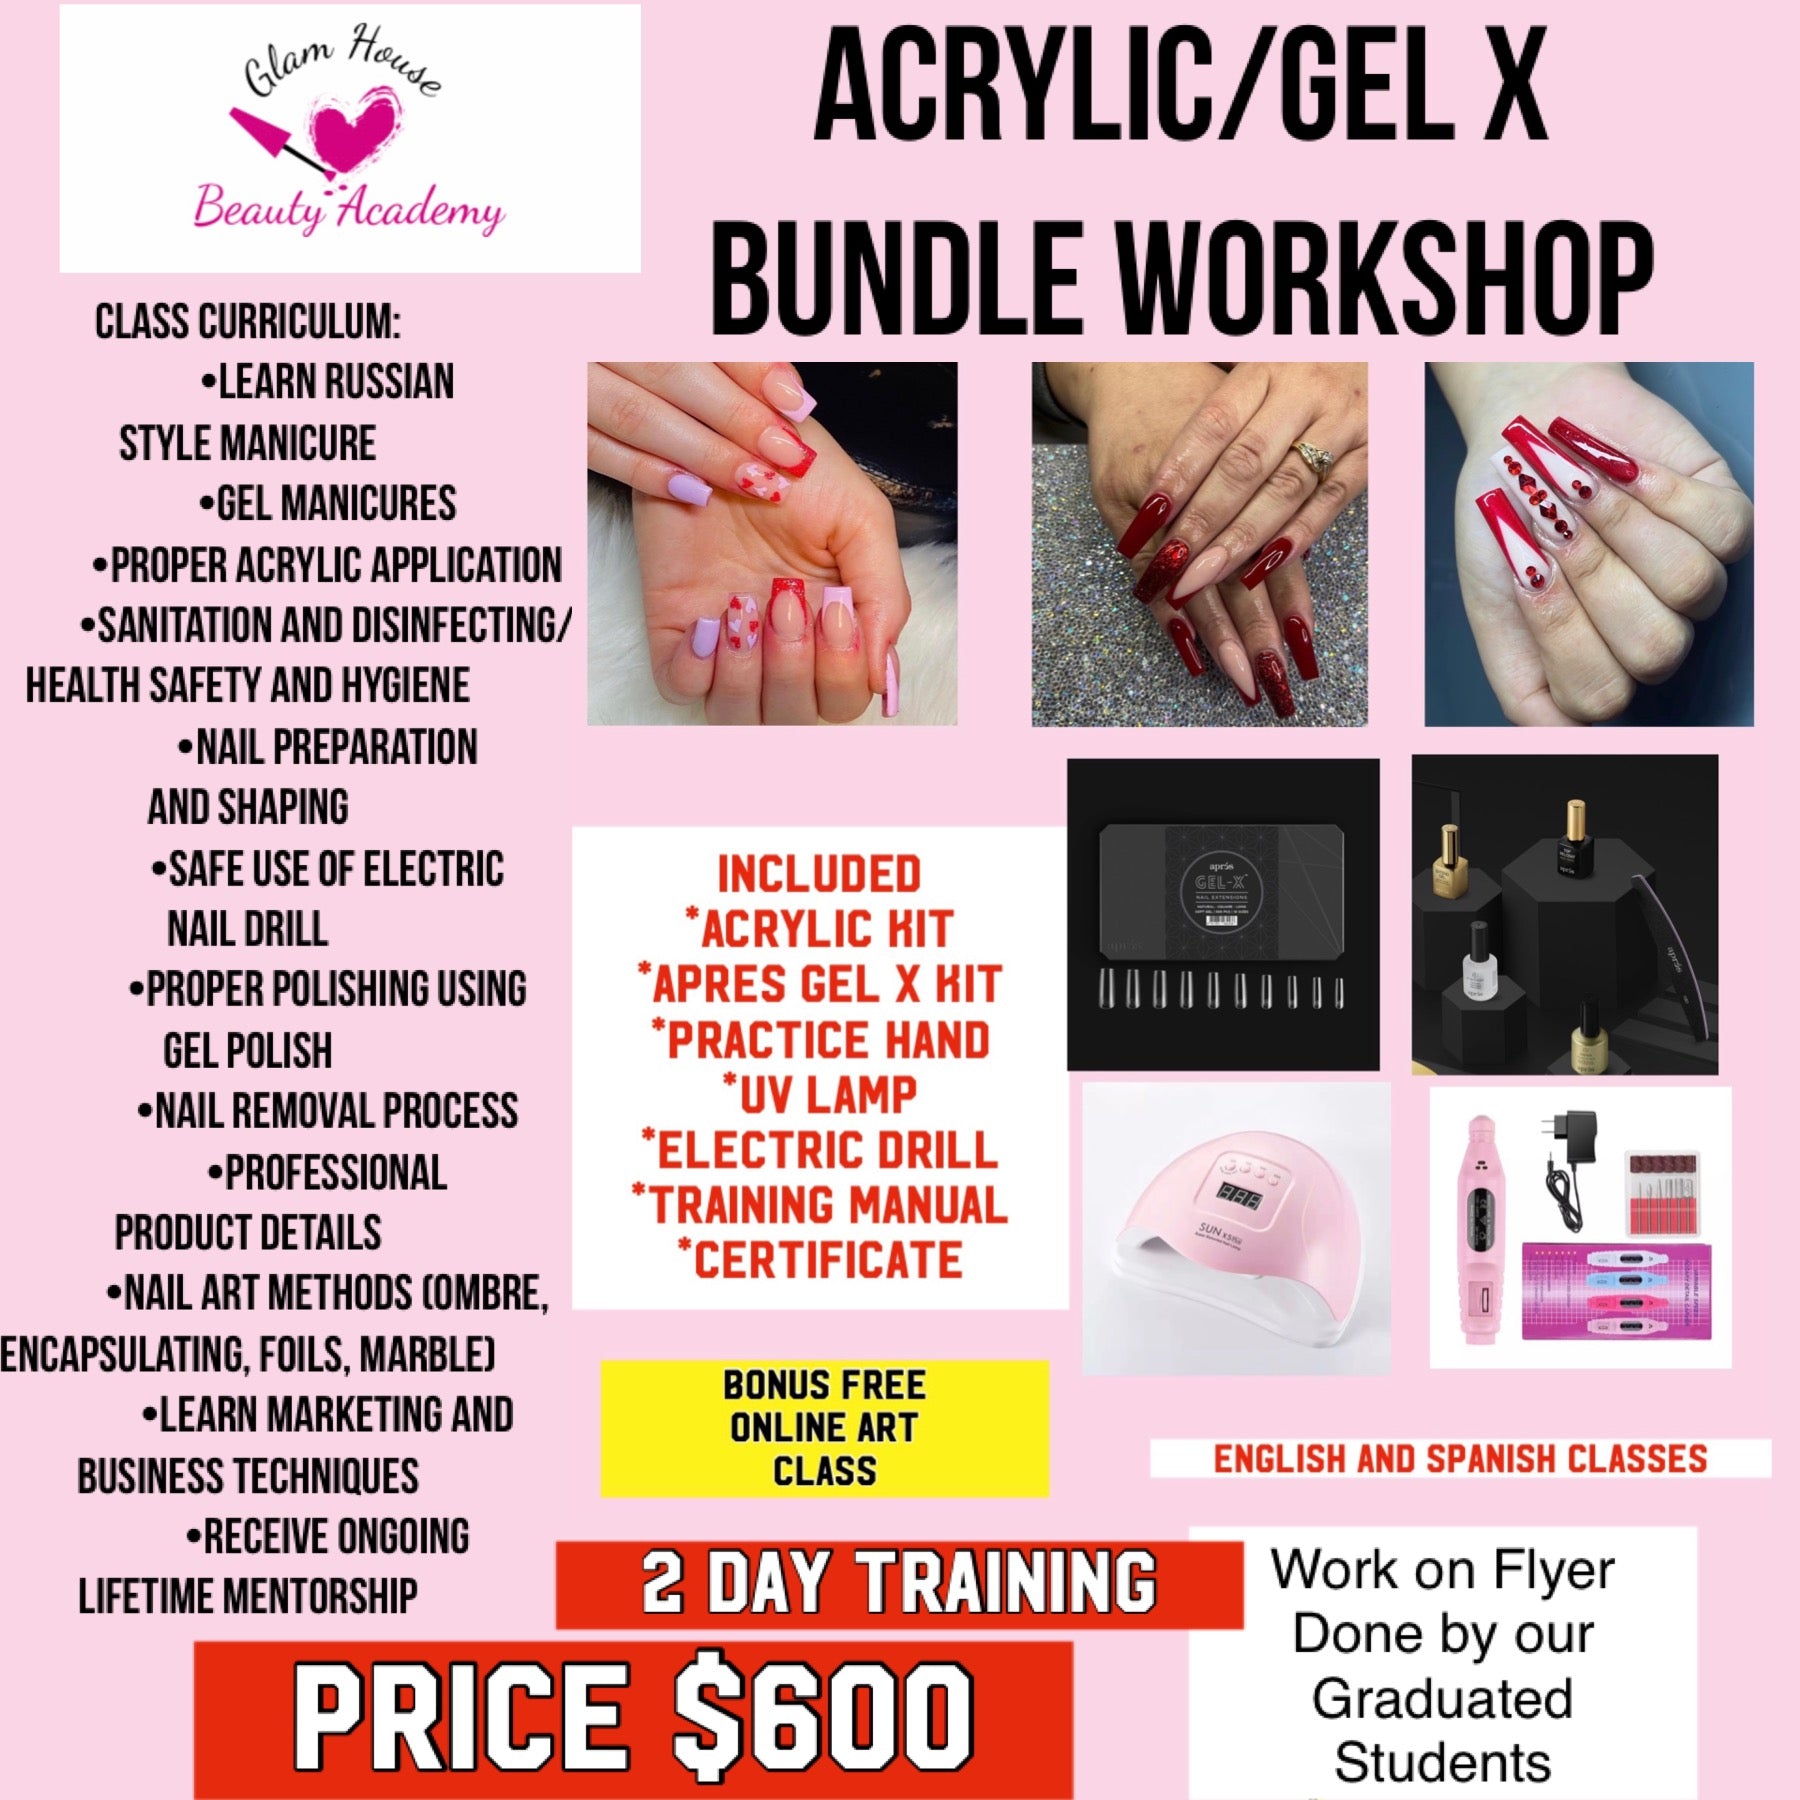 ACRYLIC AND GELX BUNDLE CLASS – GlamHouse Beauty Academy and